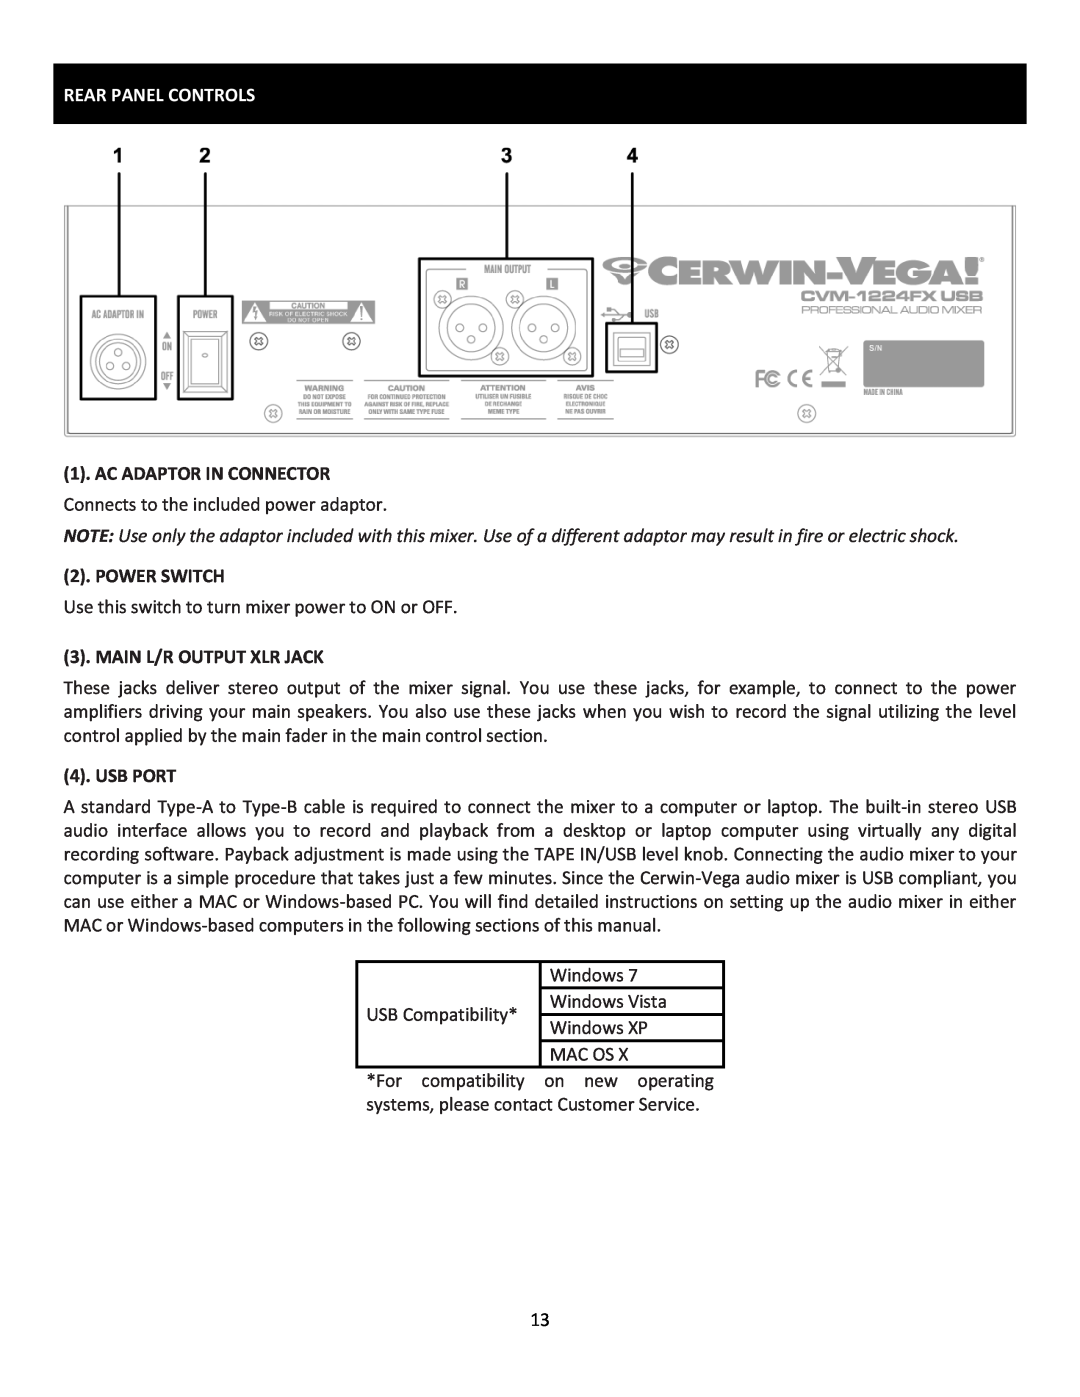 Cerwin-Vega CVM-1224FXUSB Rear Panel Controls, Ac Adaptor In Connector, Power Switch, Main L/R Output Xlr Jack, Usb Port 